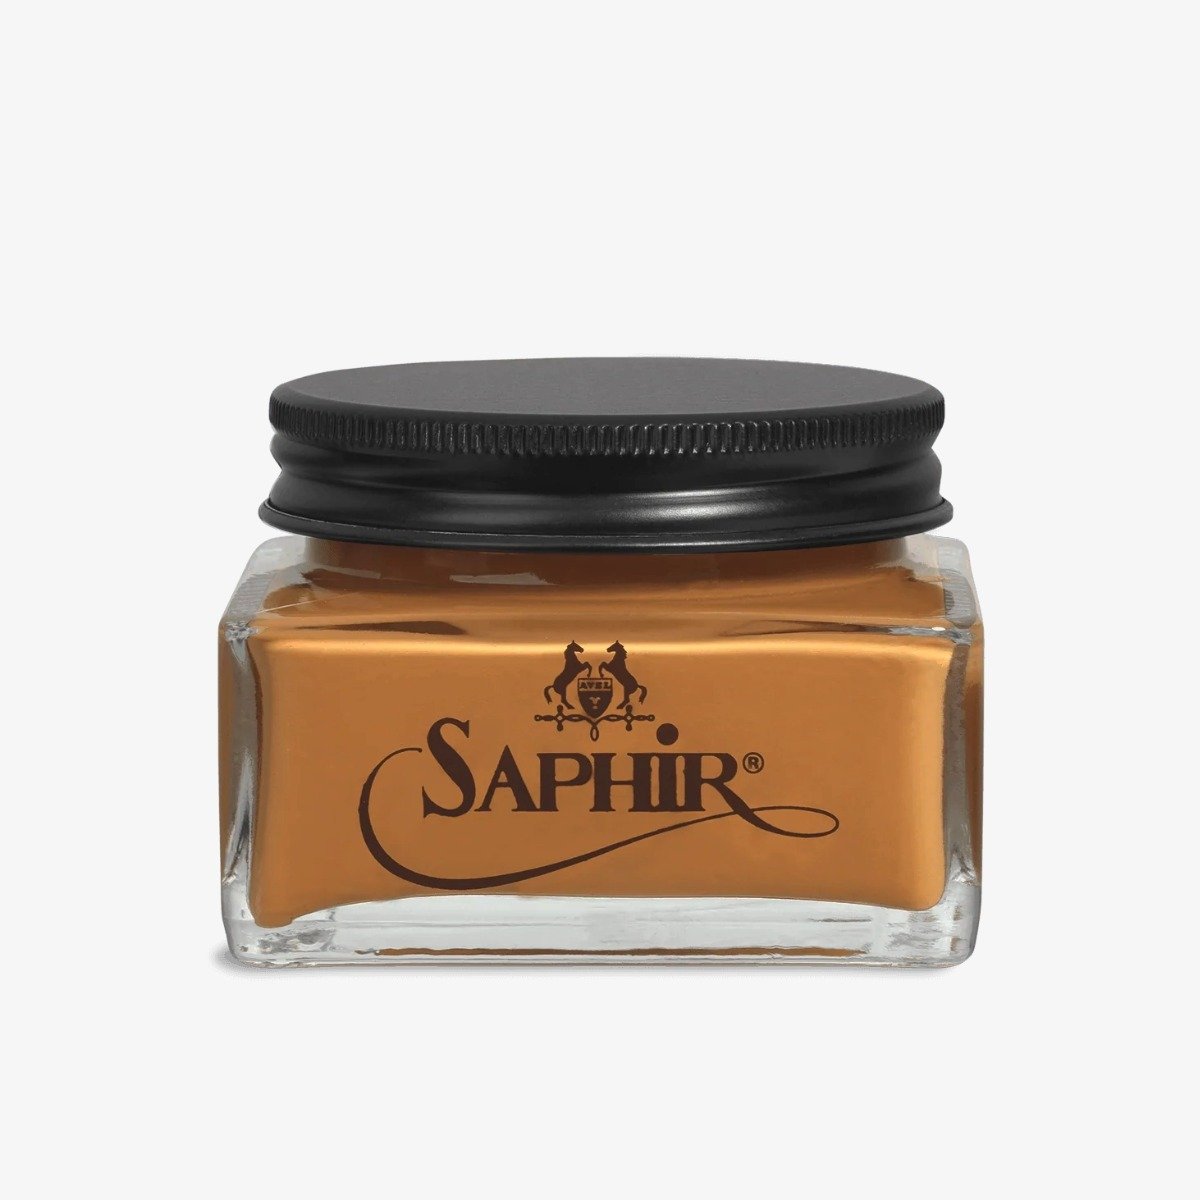 Saphir Crème 1925 light brown leather cream